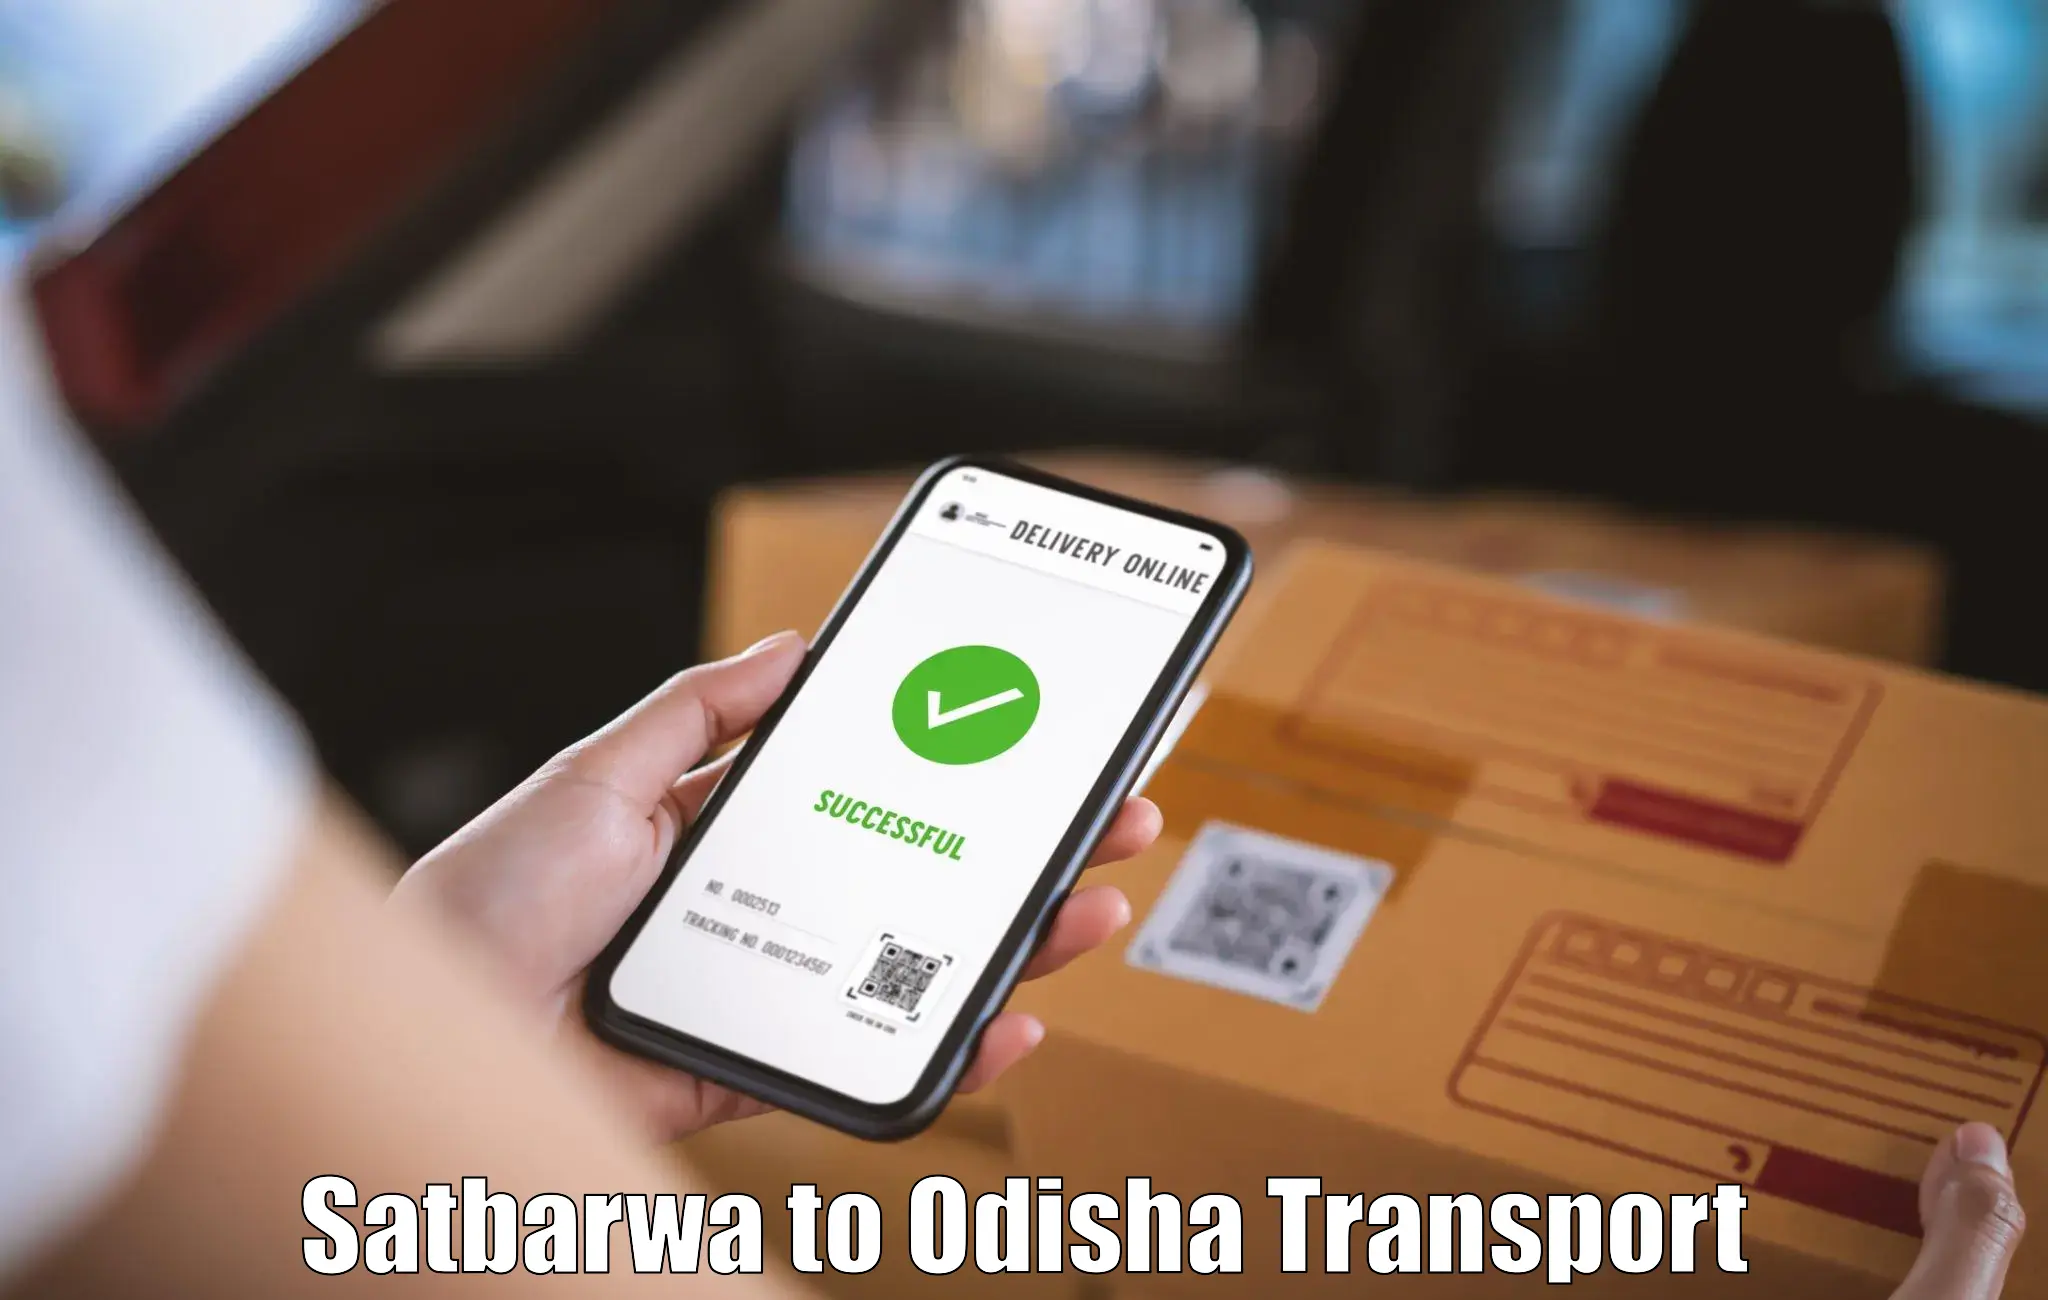 Interstate transport services Satbarwa to Odisha